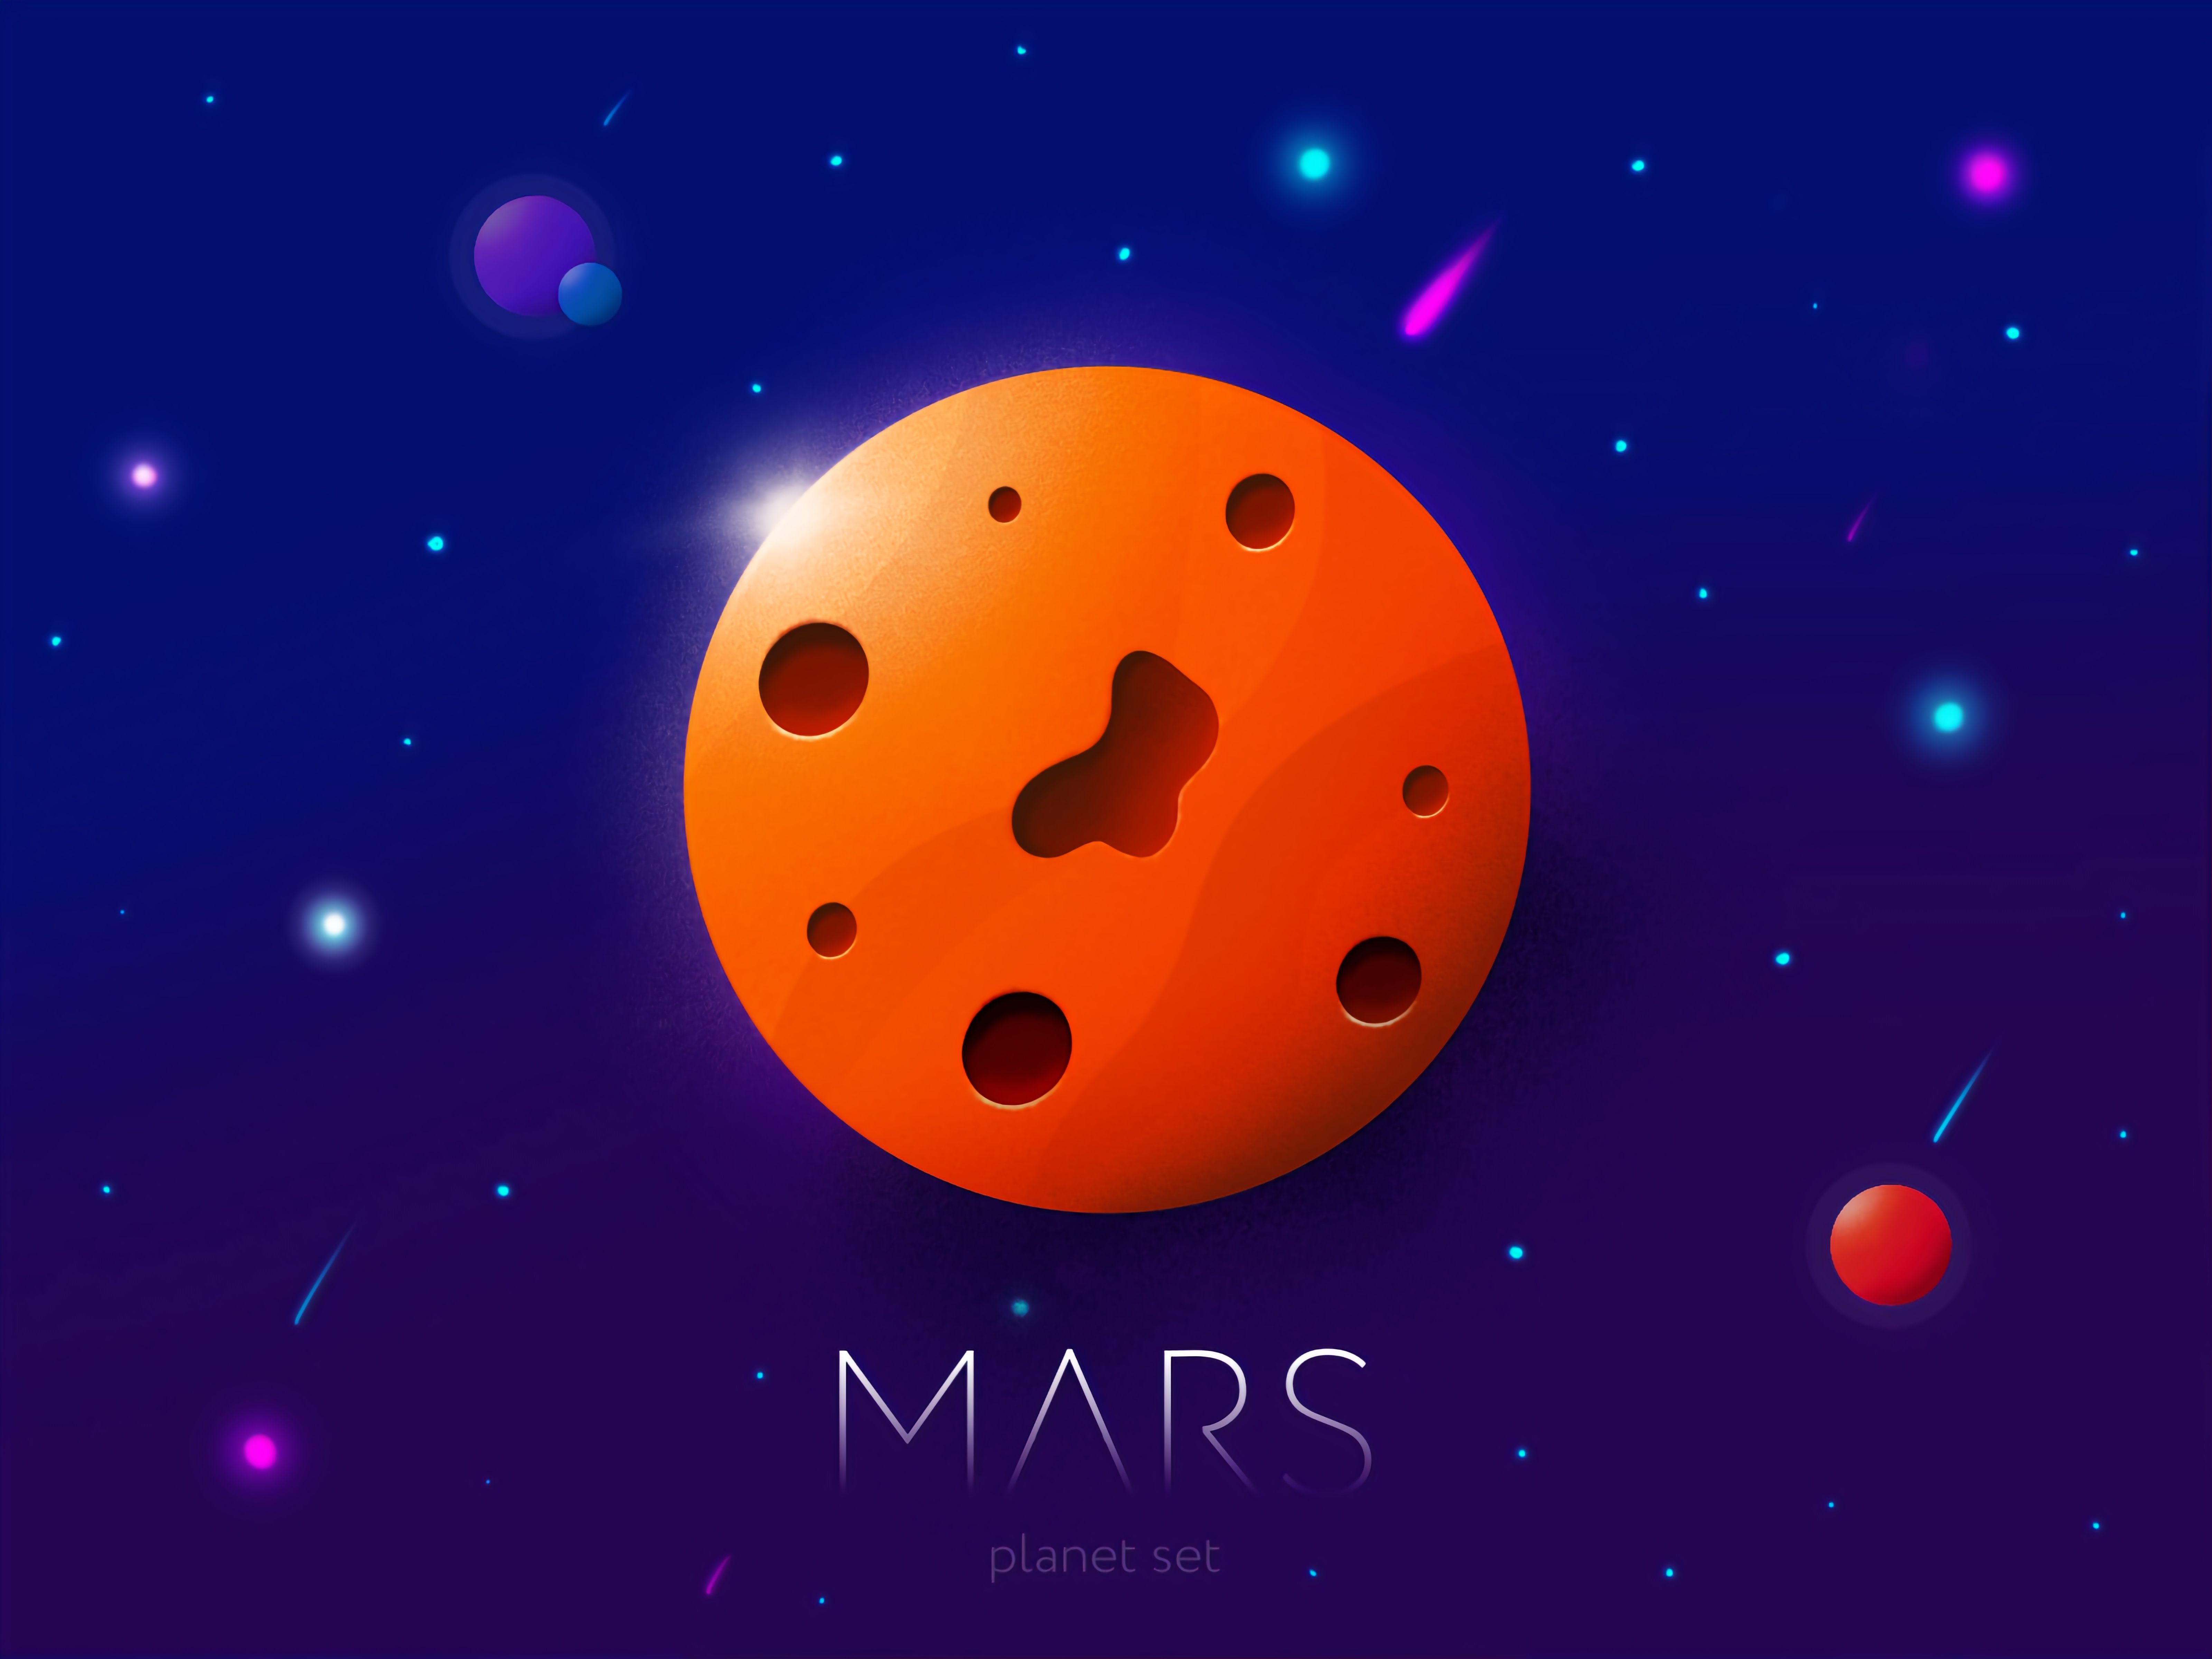 Картинка Планета Марс из пластилина для детей